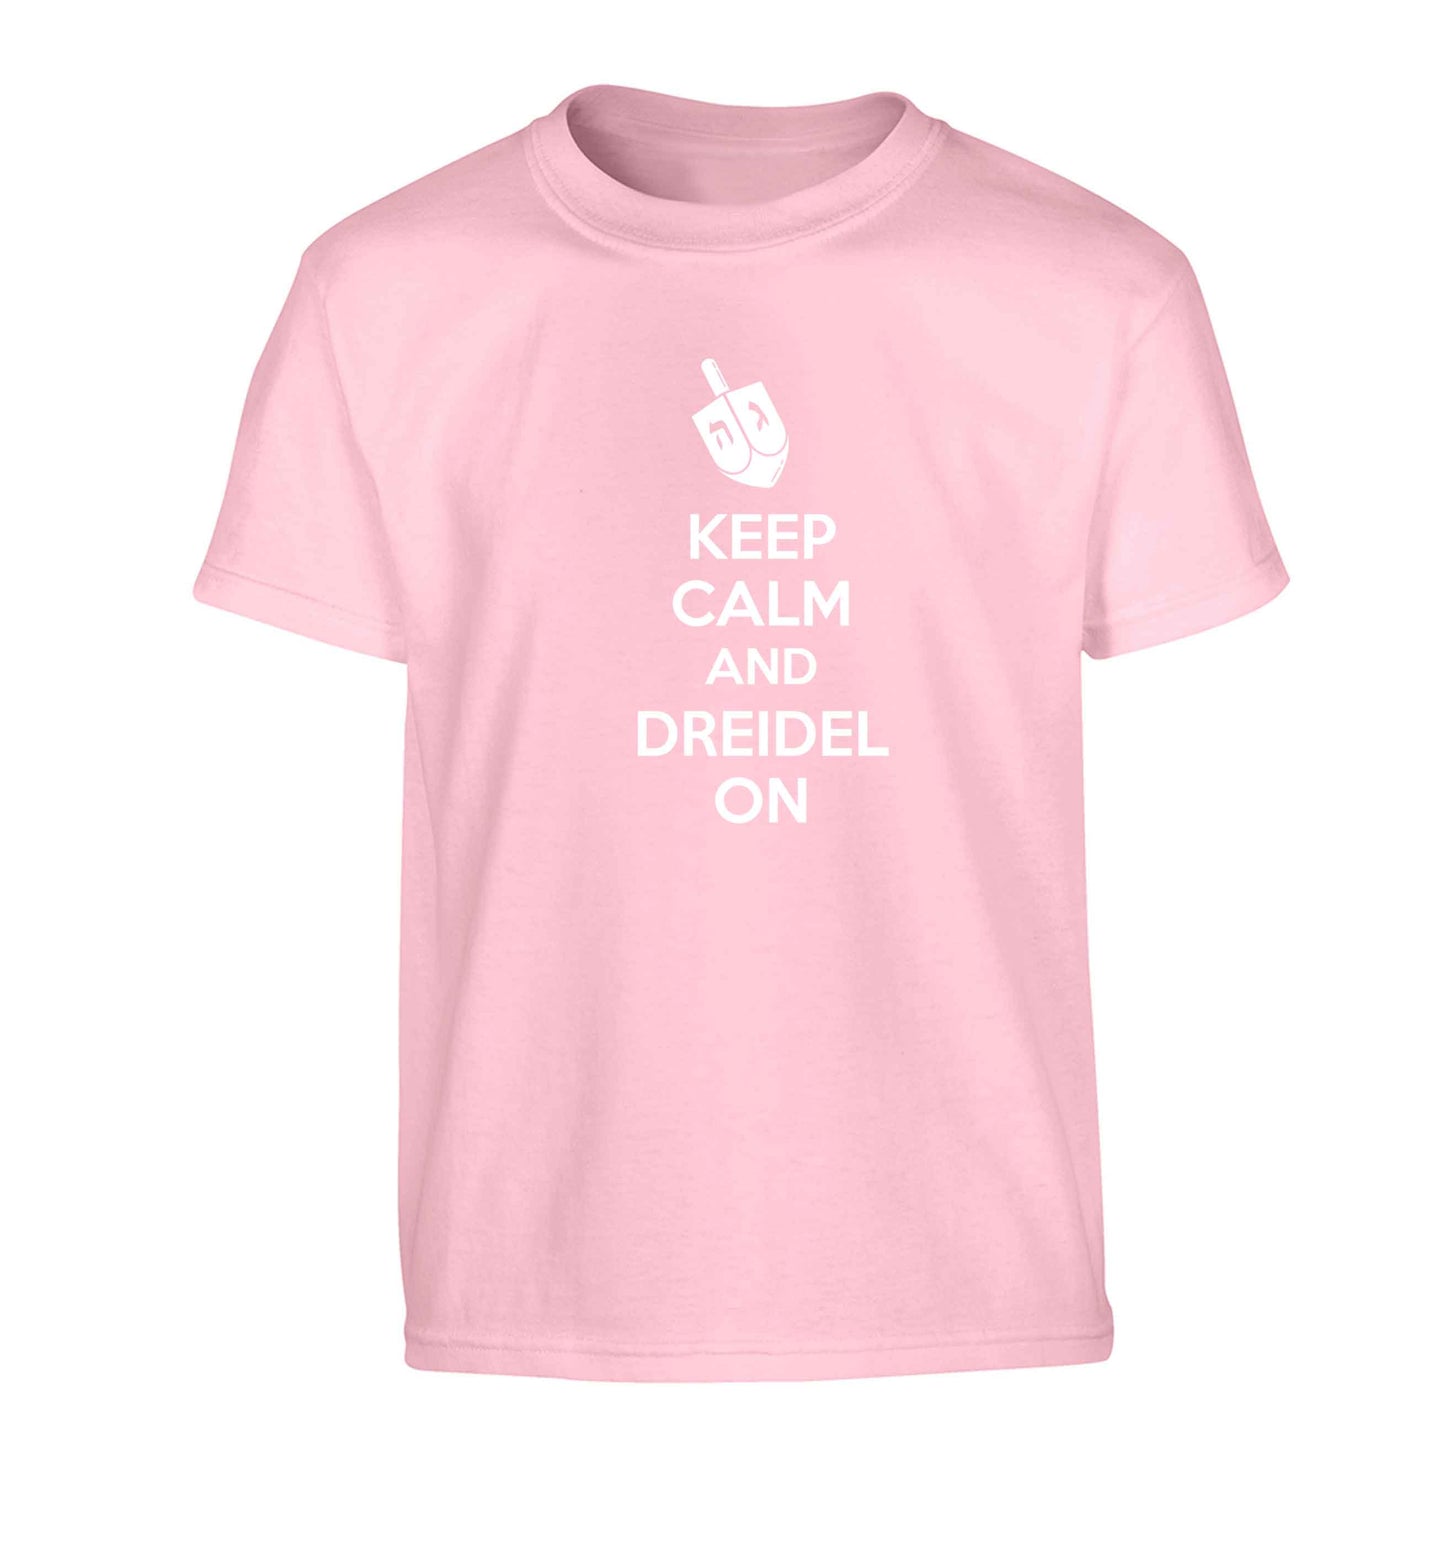 Keep calm and dreidel on Children's light pink Tshirt 12-13 Years